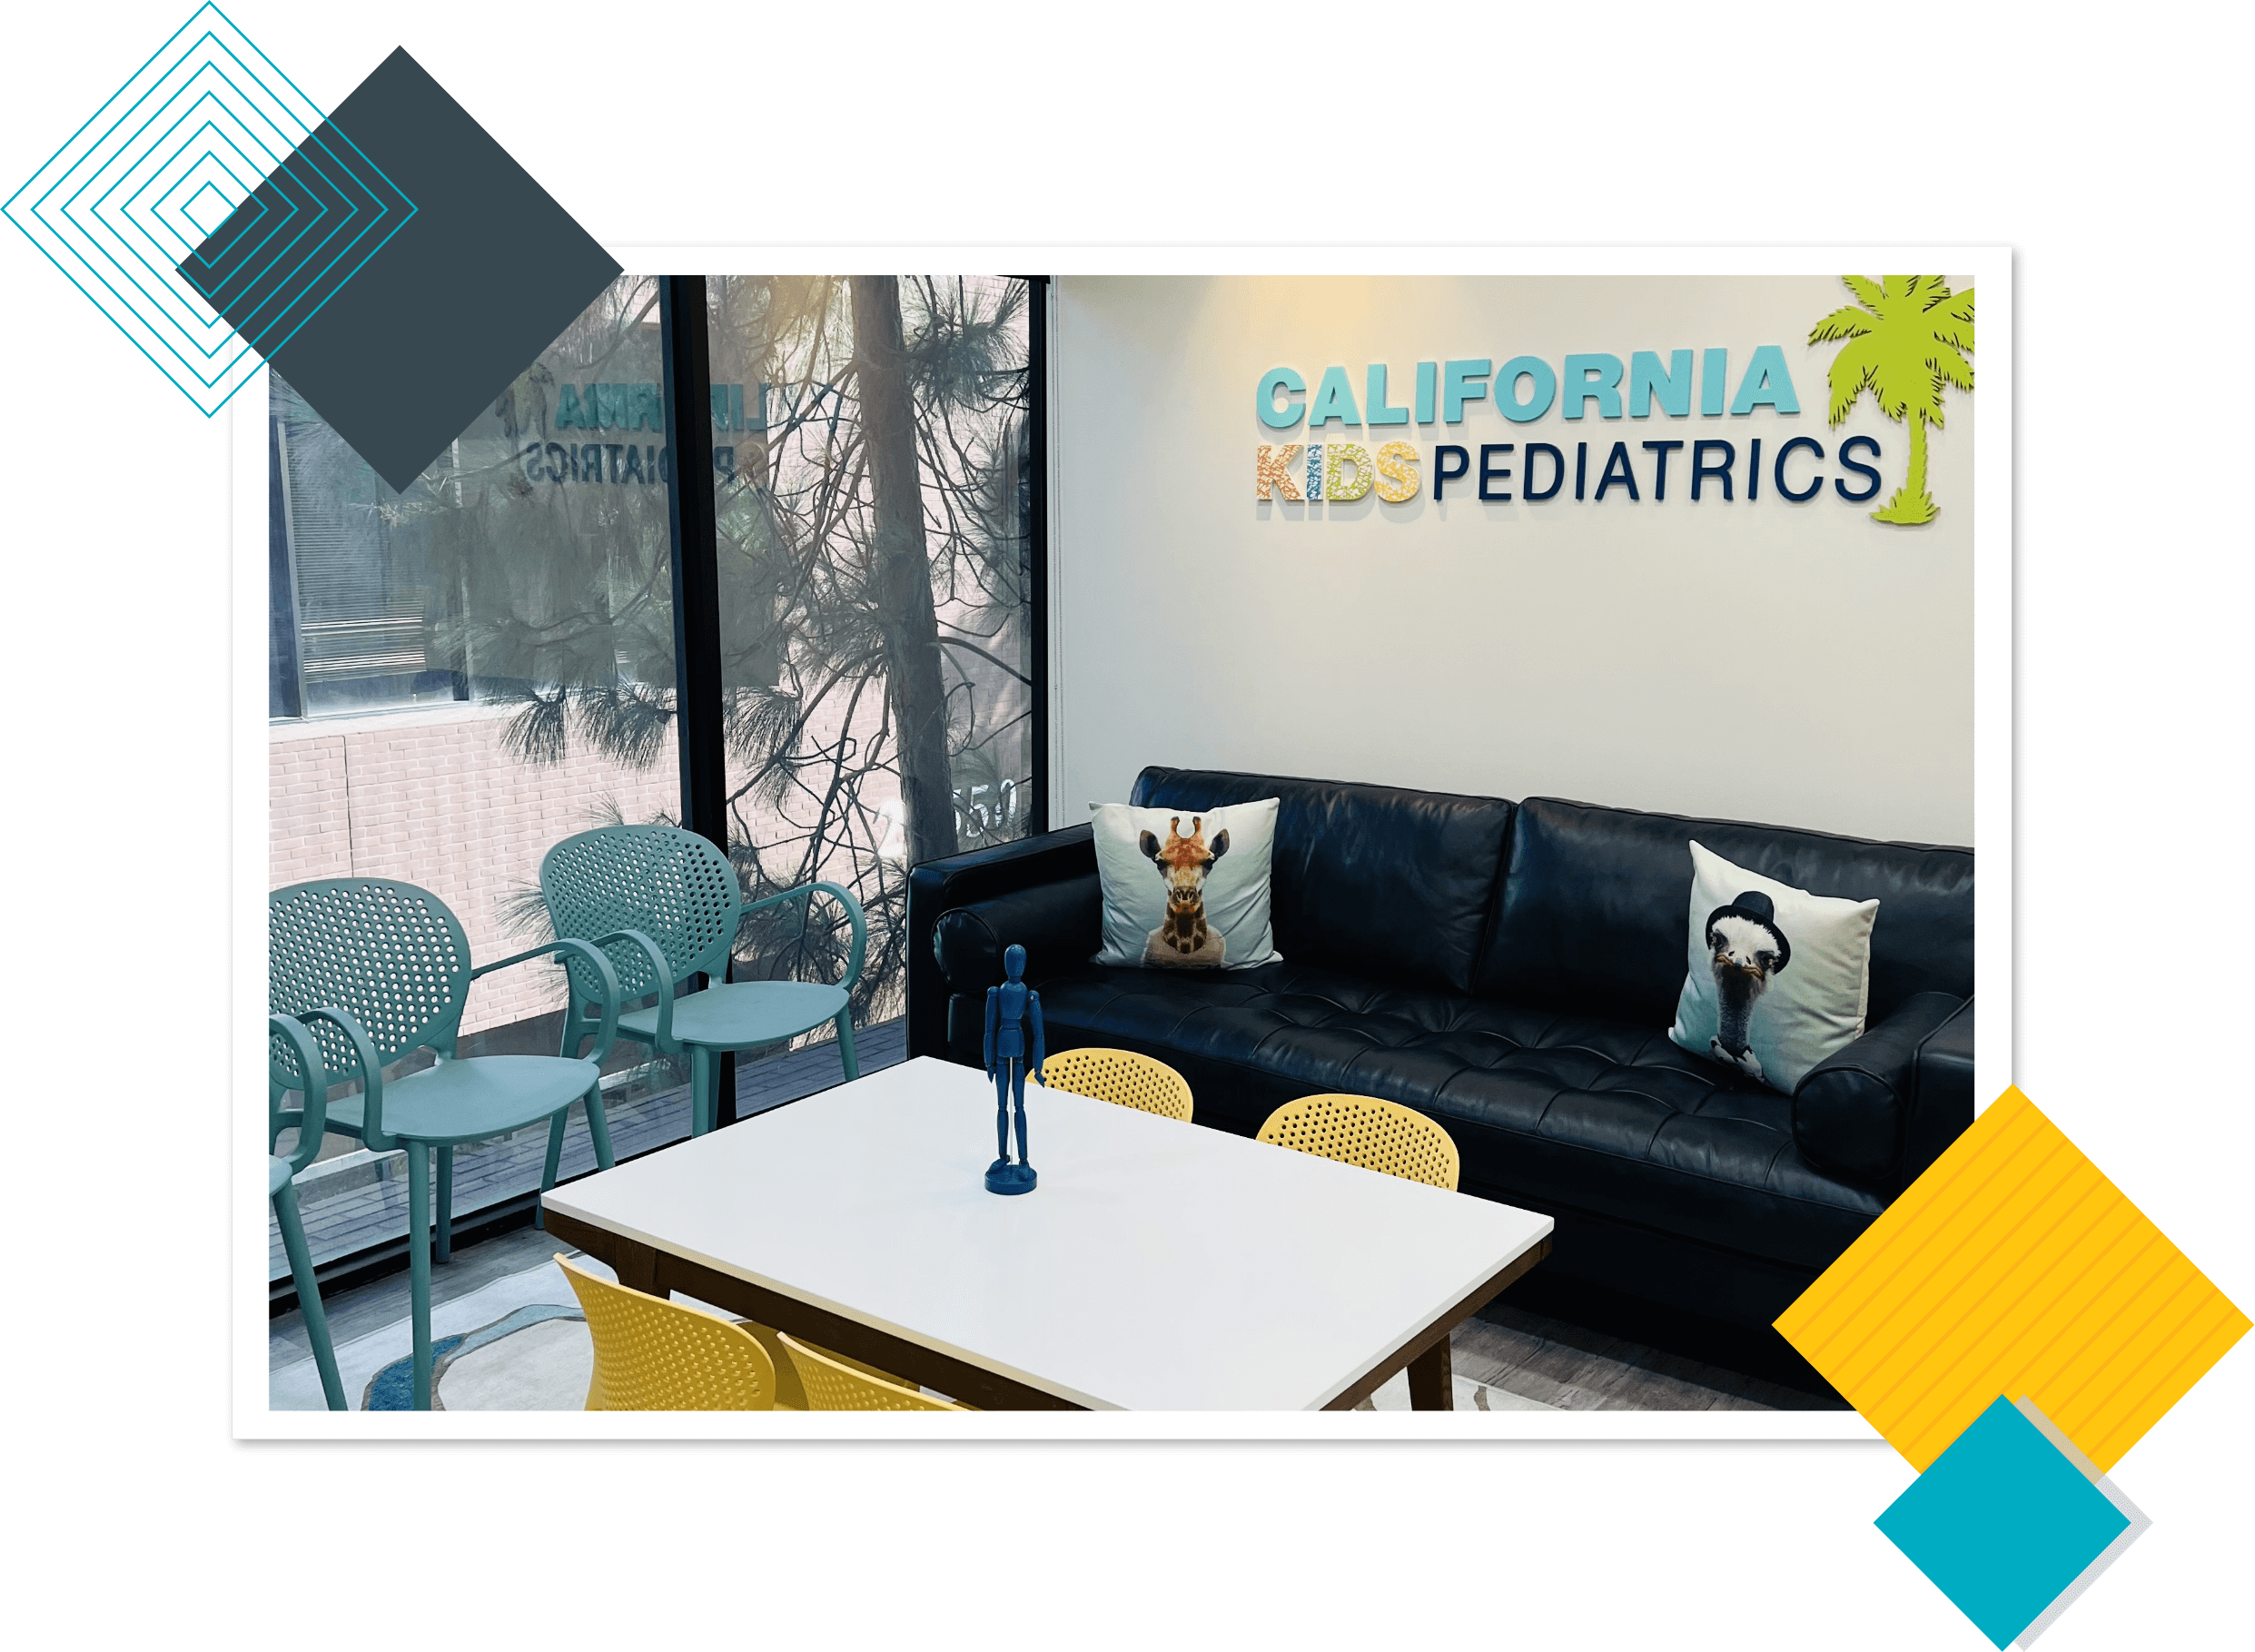 California Kids Pediatrics Clinic Waiting Room